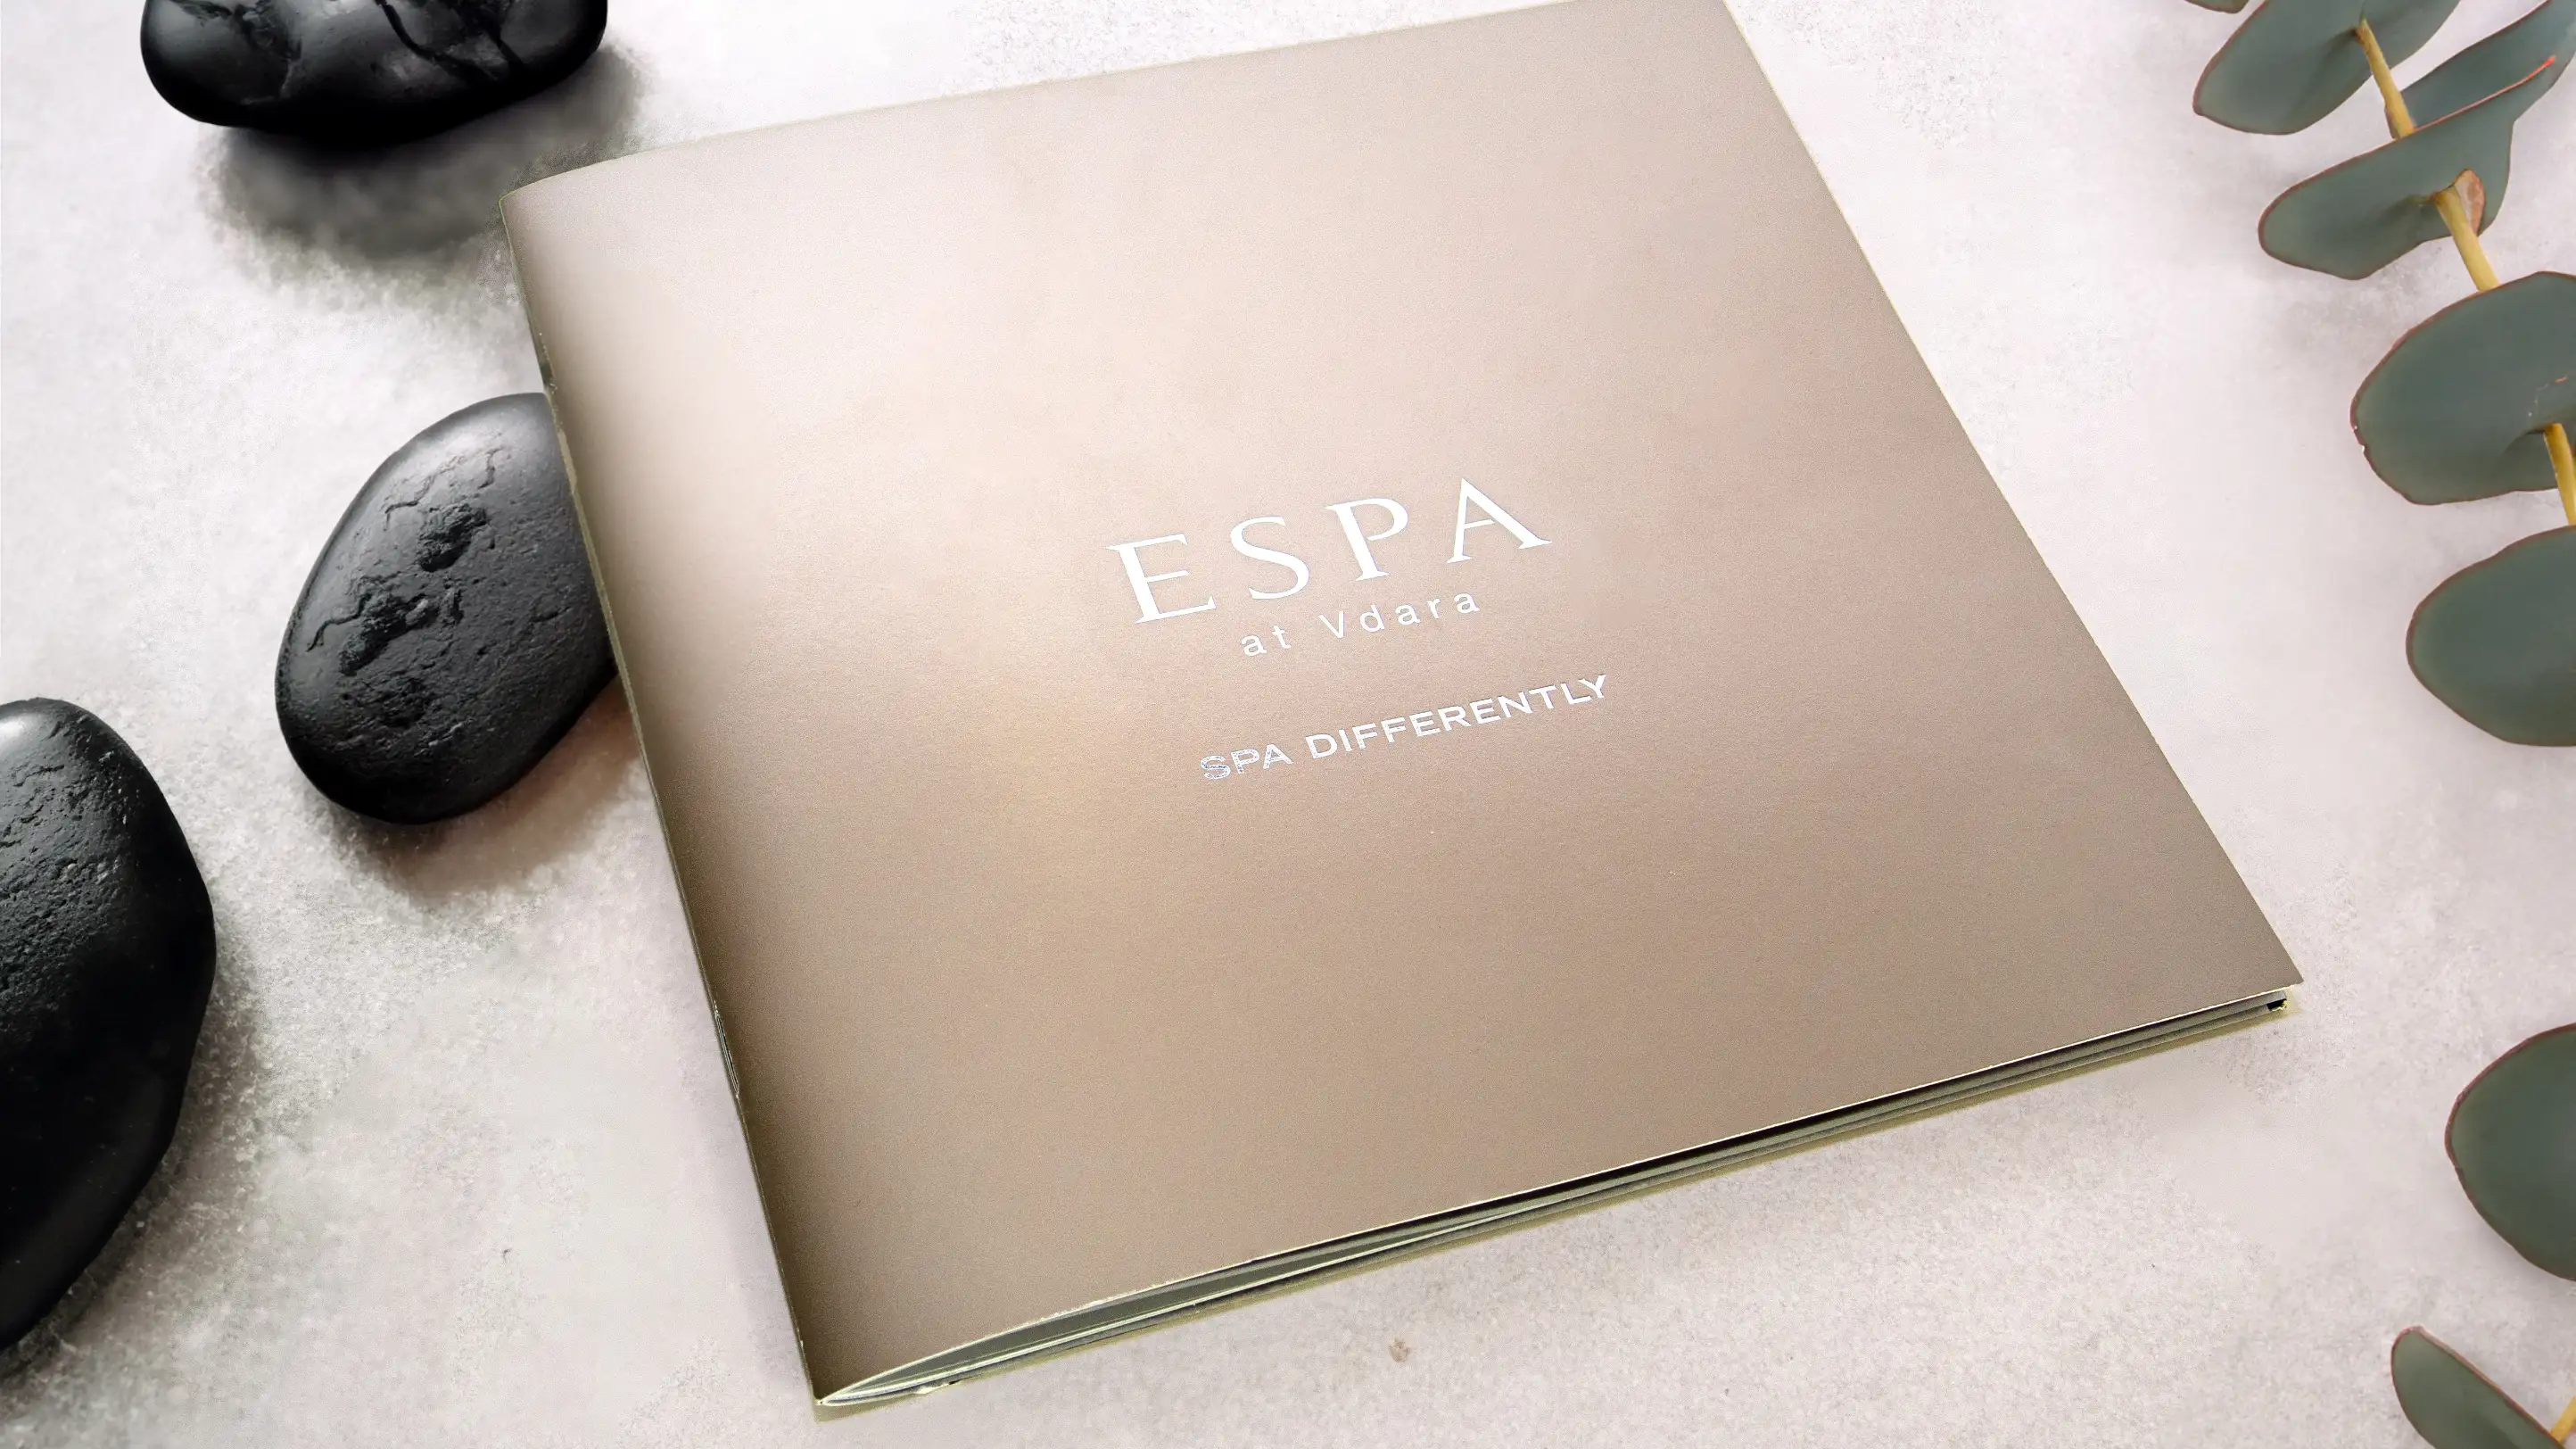 Metallic gold cover of Espa at Vdara spa brochure design.